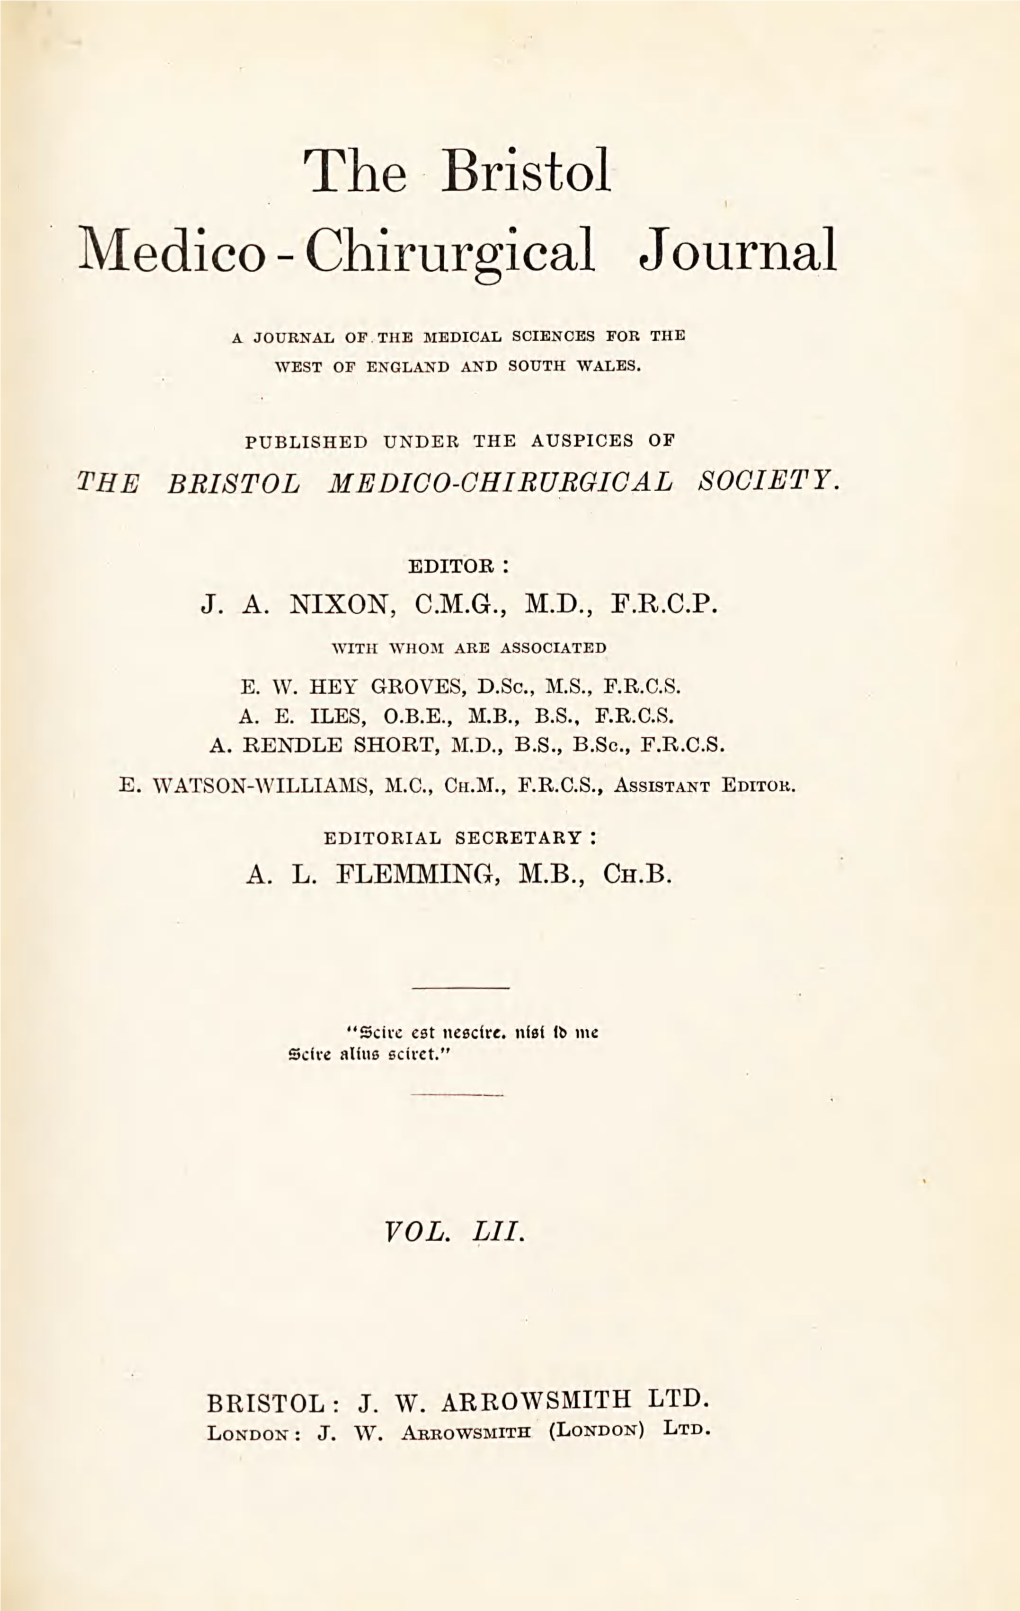 Medico - Chirurgical Journal